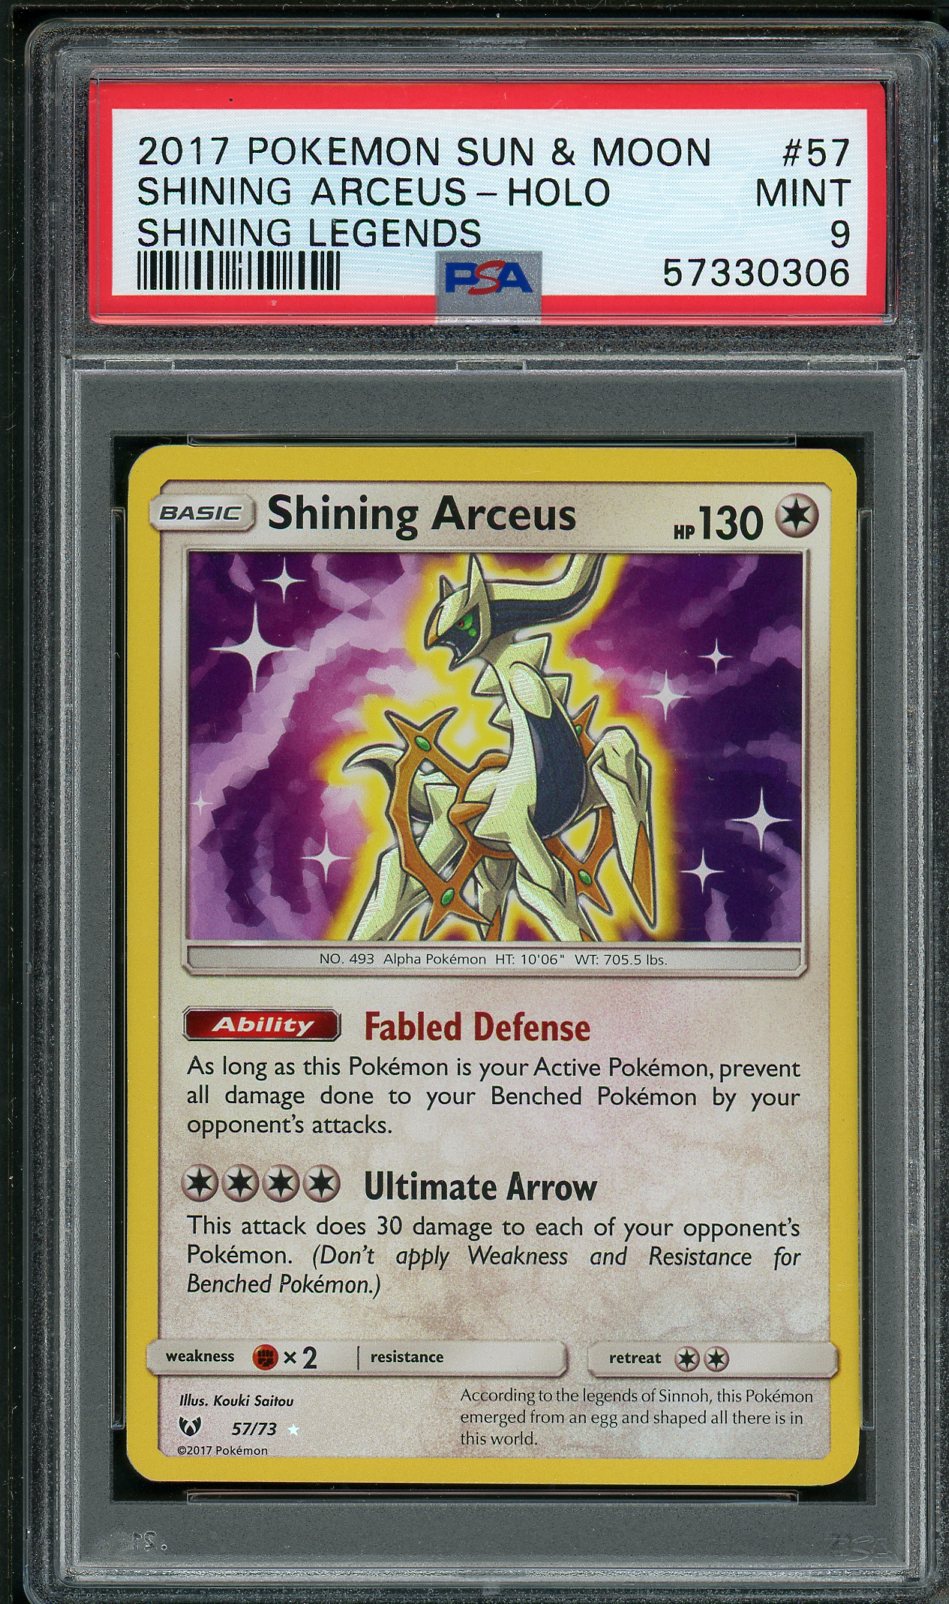 PSA (MINT 9) Shining Arceus-holo #57 - Pokemon Sun & Moon Shining Legends (#57330306)